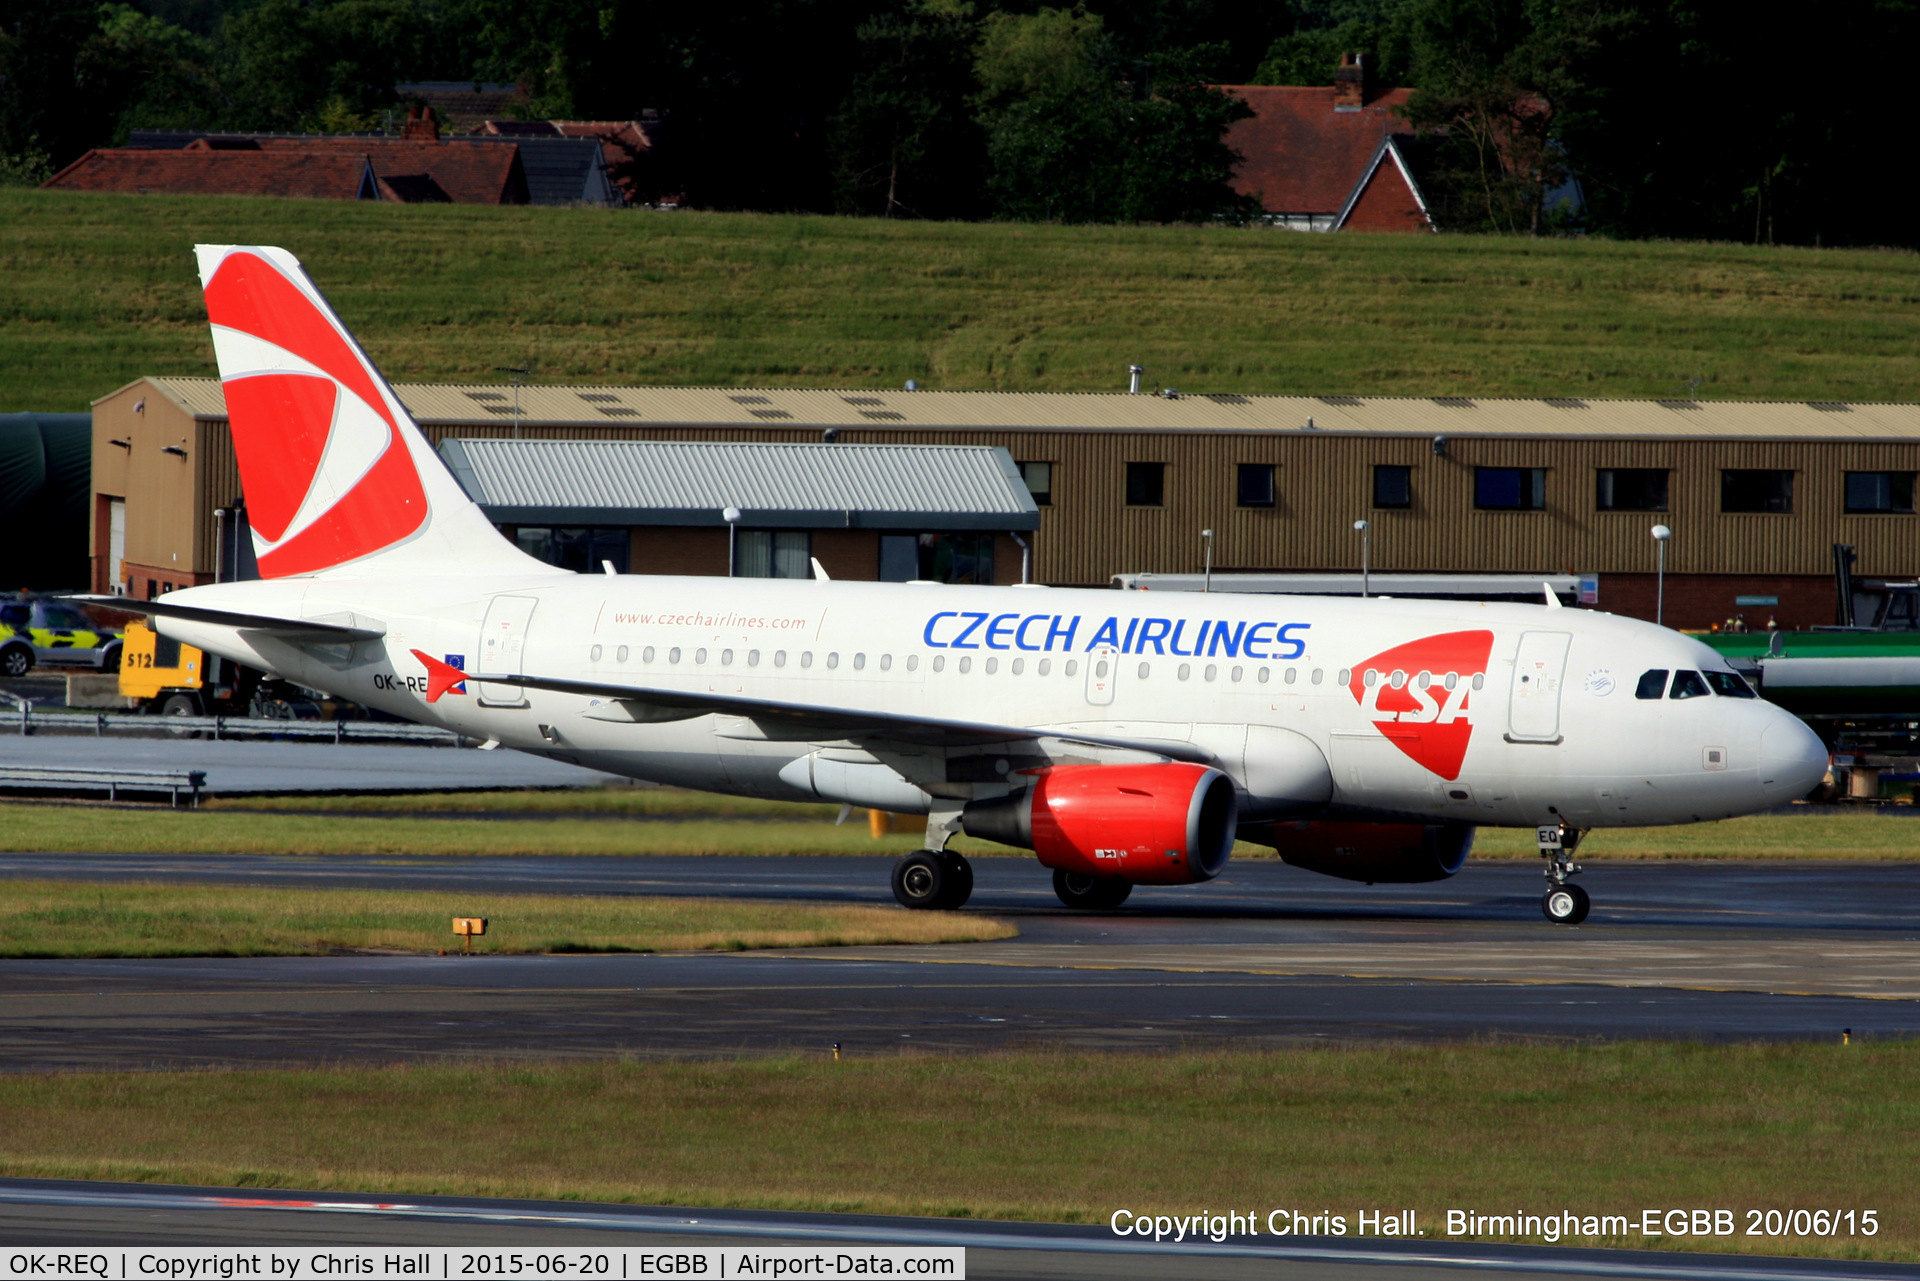 OK-REQ, 2011 Airbus A319-112 C/N 4713, Czech Airlines